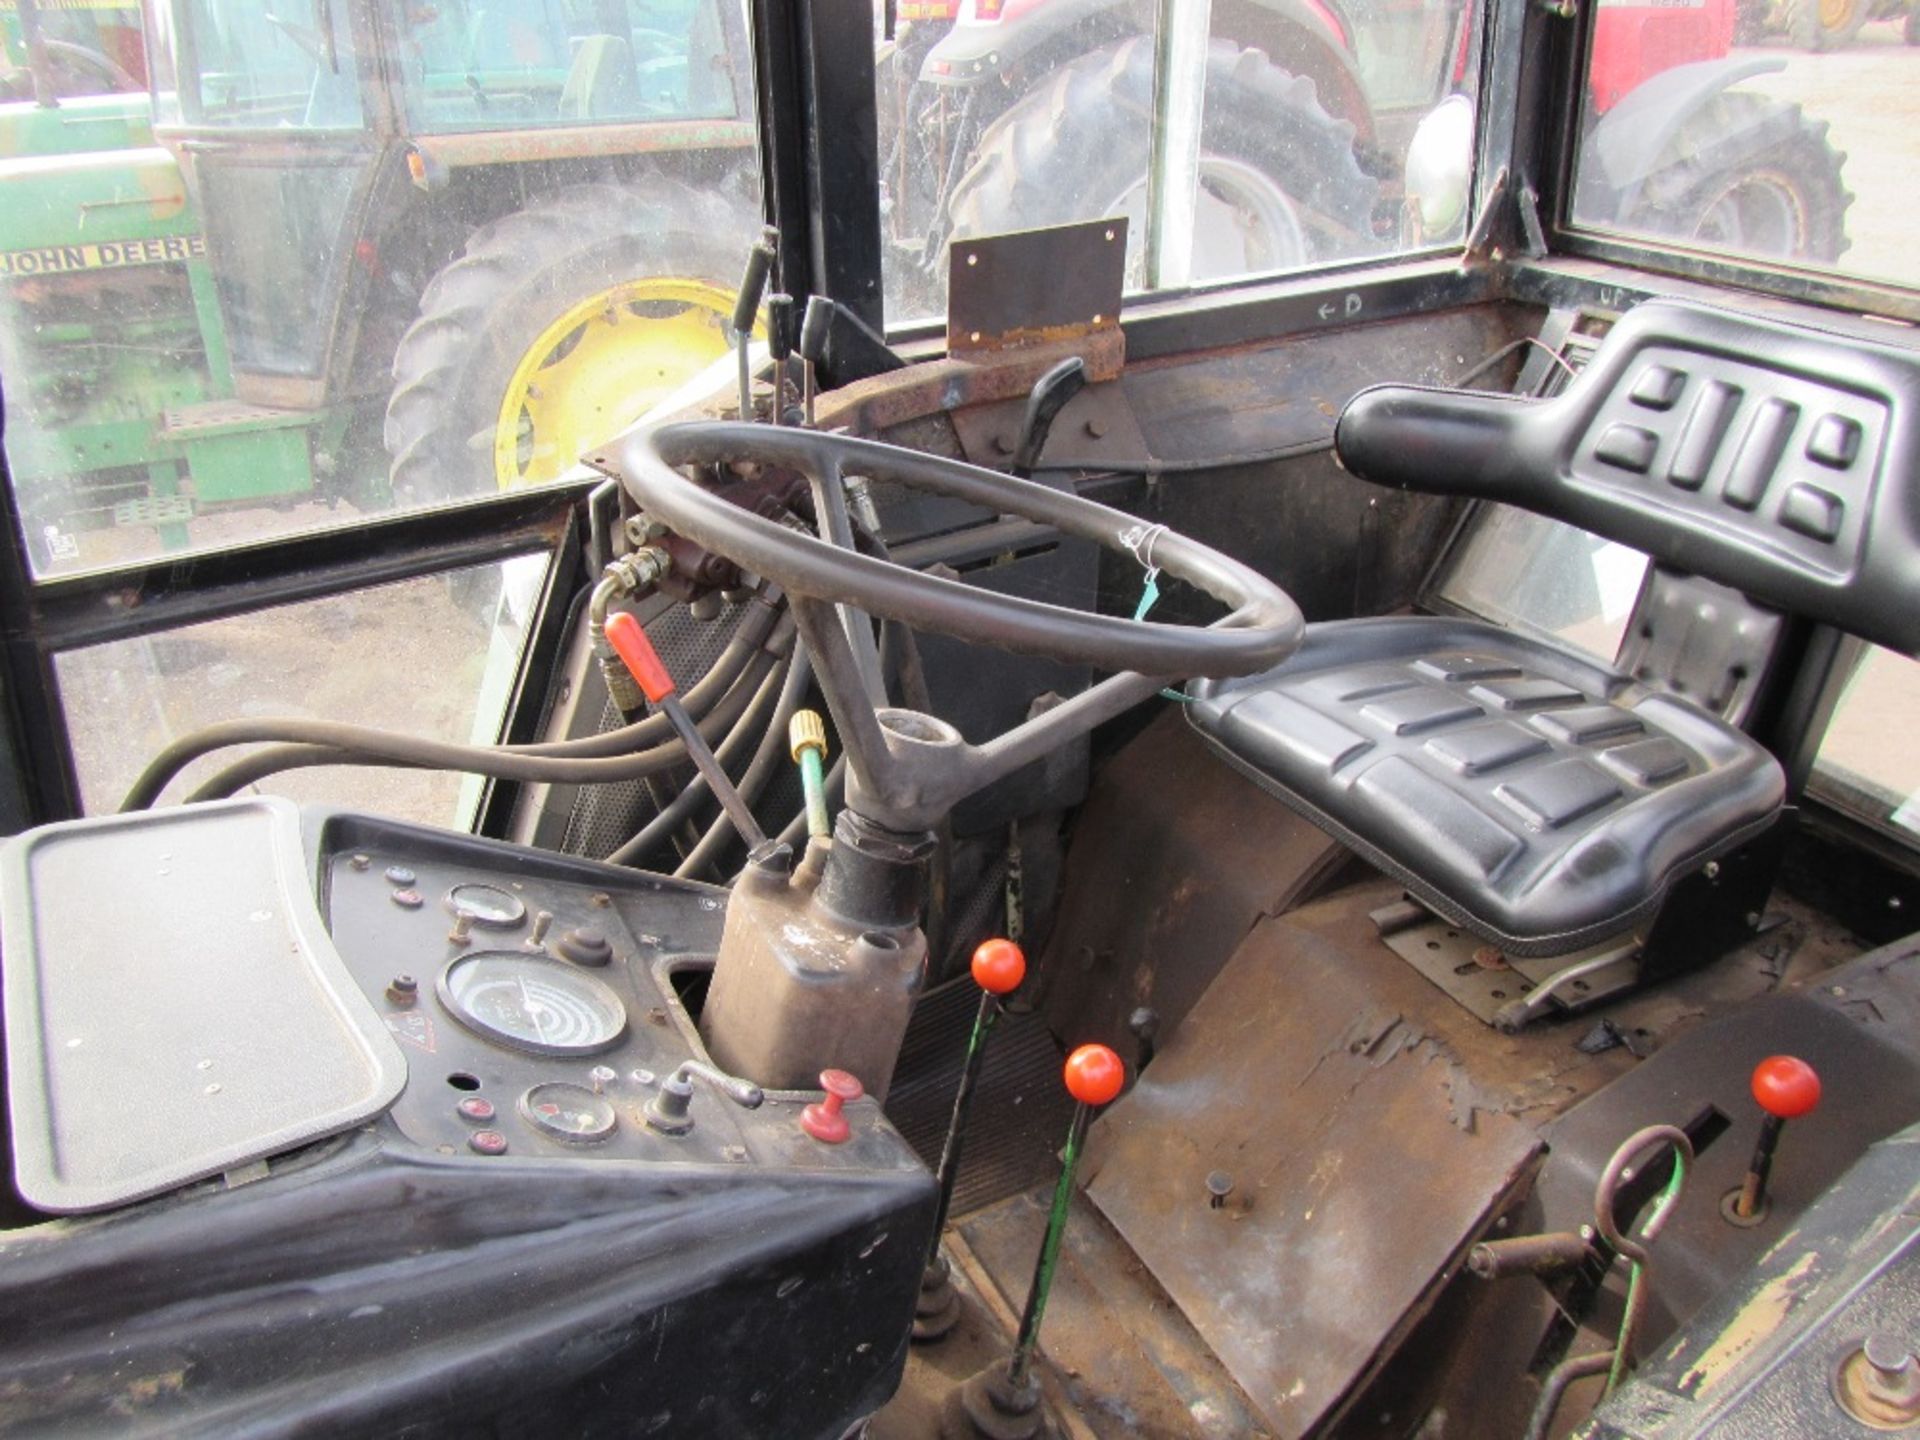 John Deere 2030 Tractor with Quicke Loader Reg. No. ODO 859R Ser. No. 237263 - Image 12 of 16